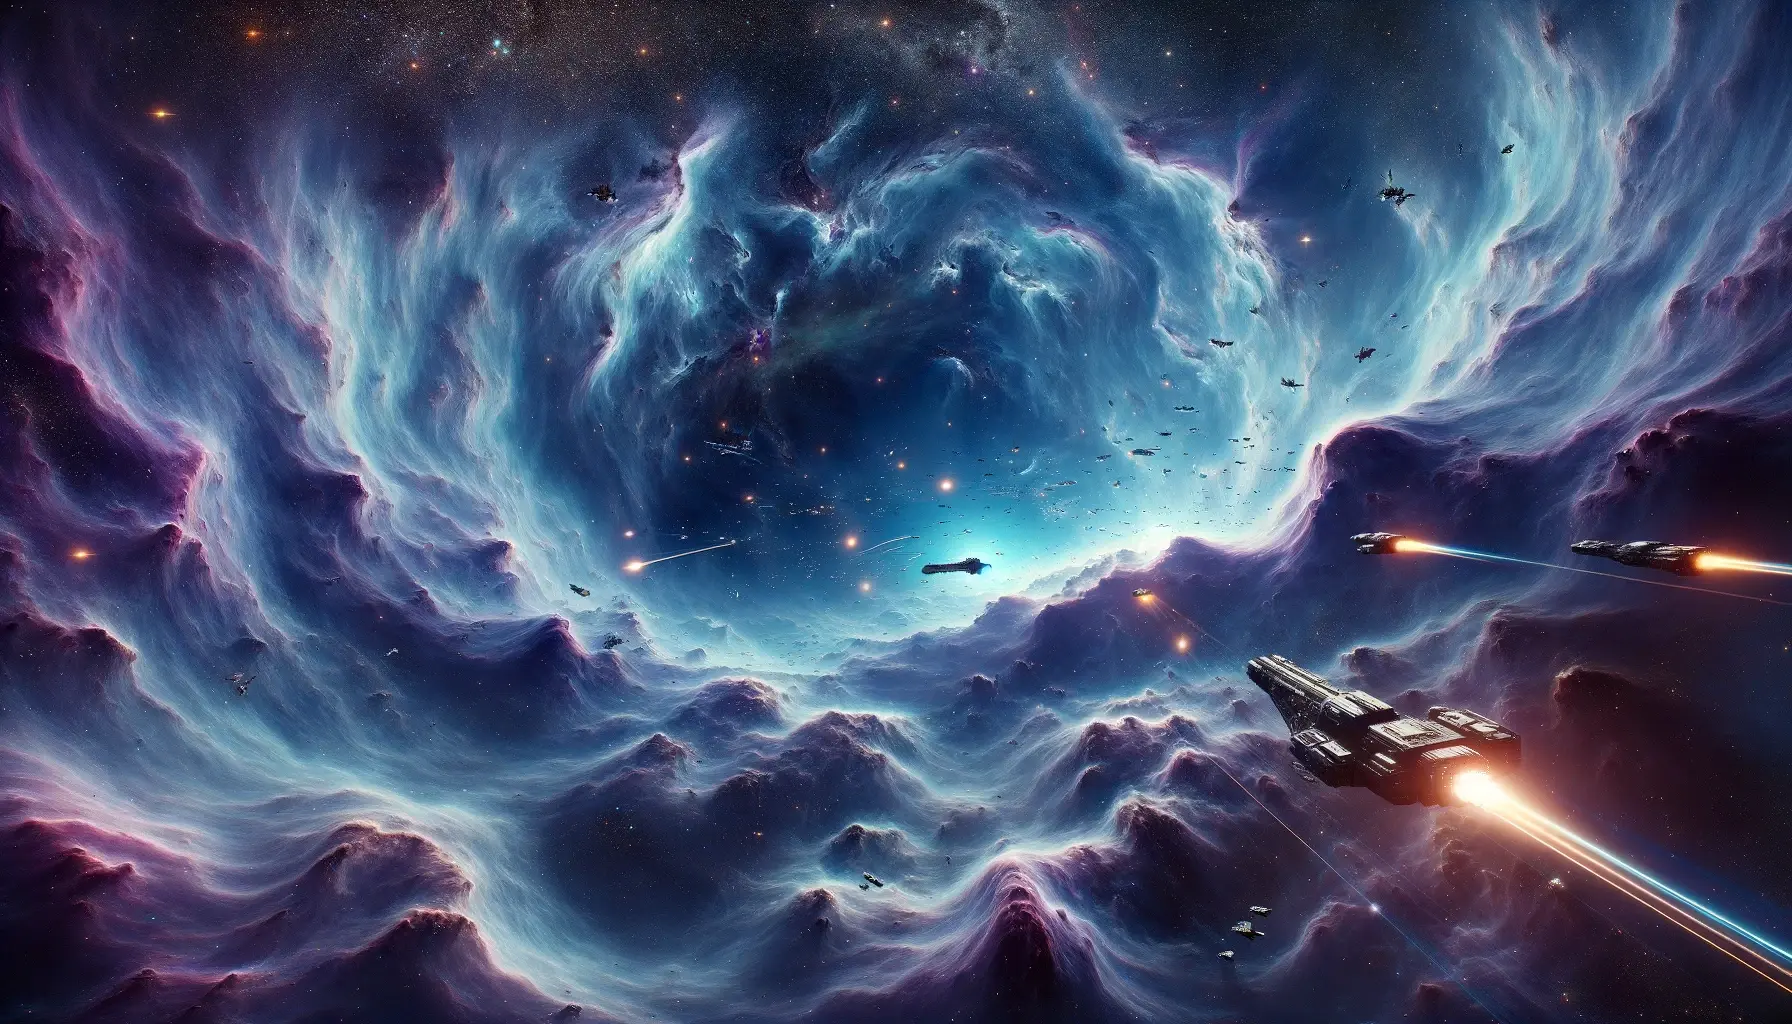 A fleet of starships flies into a purple-blue nebula for an epic space battle.